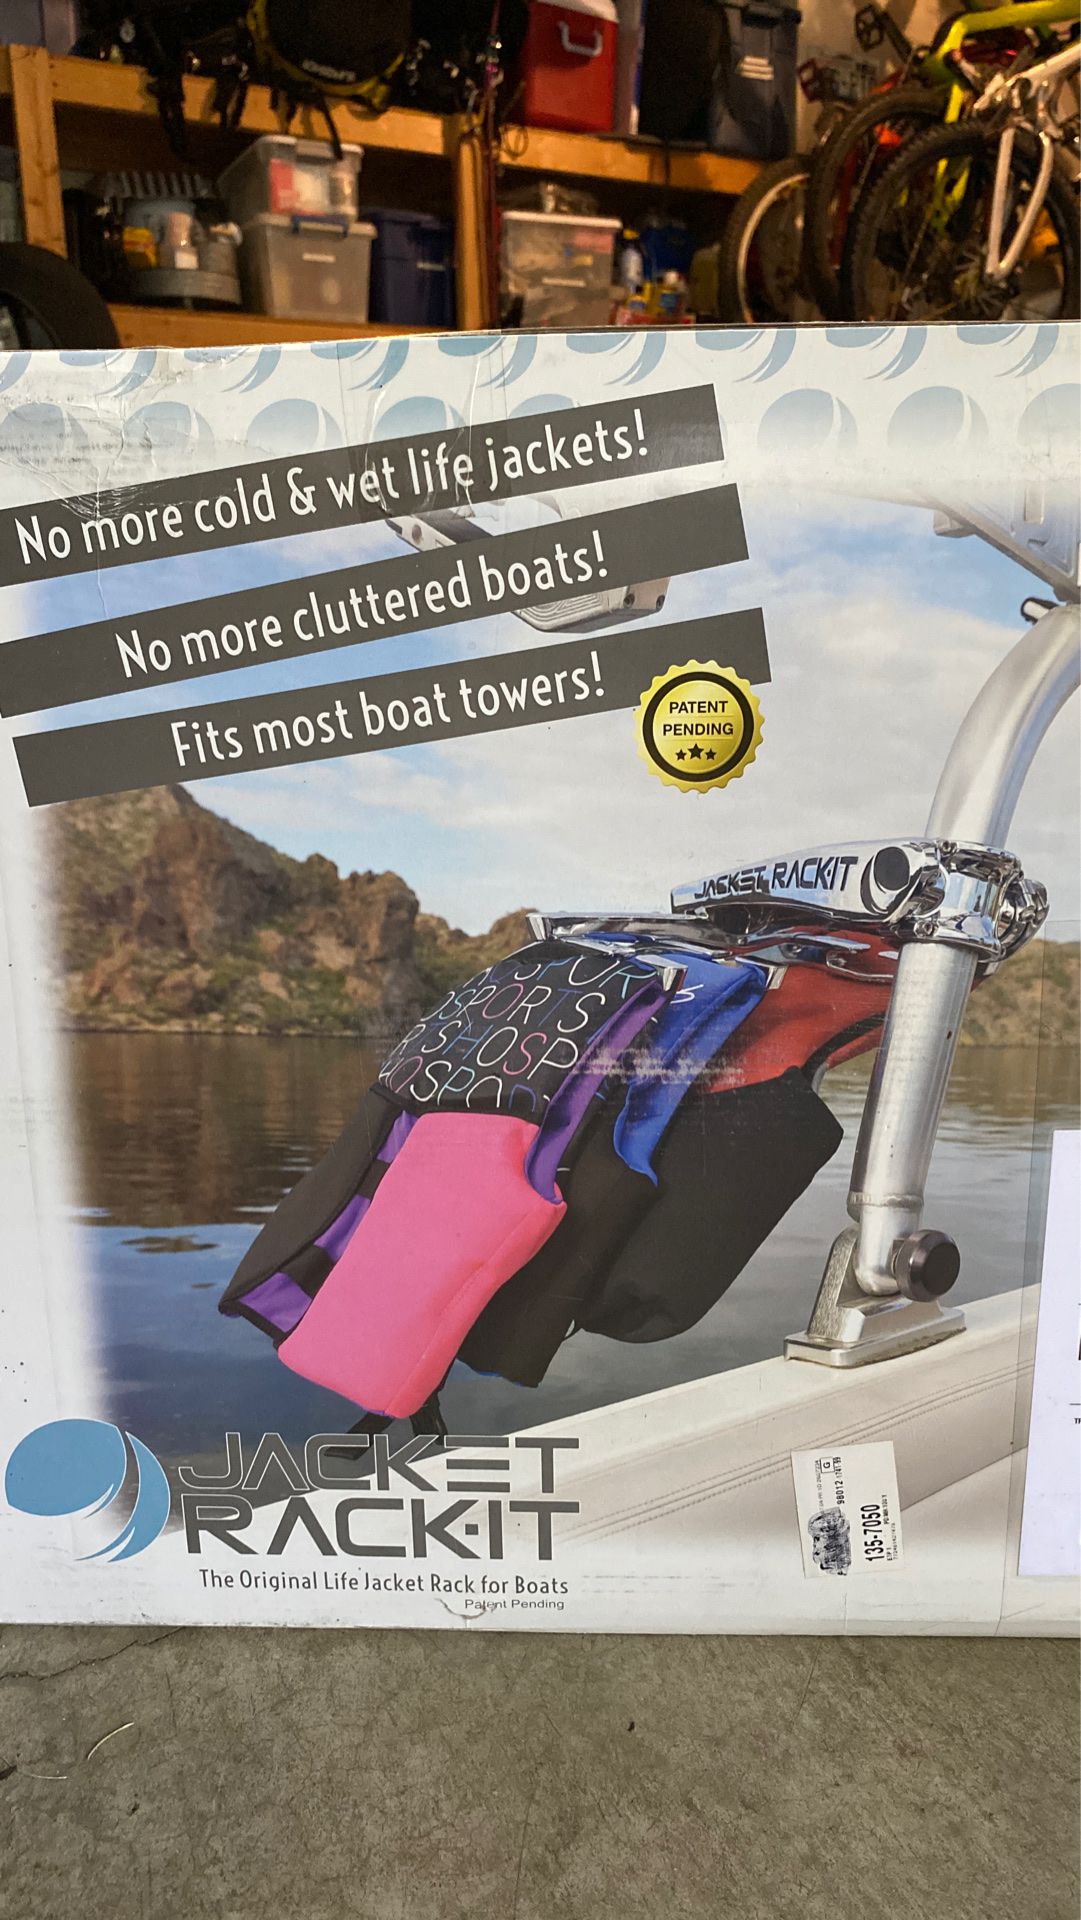 NEW Life-Jacket hanging rack for wake boat tower (Jacket Rack-It)